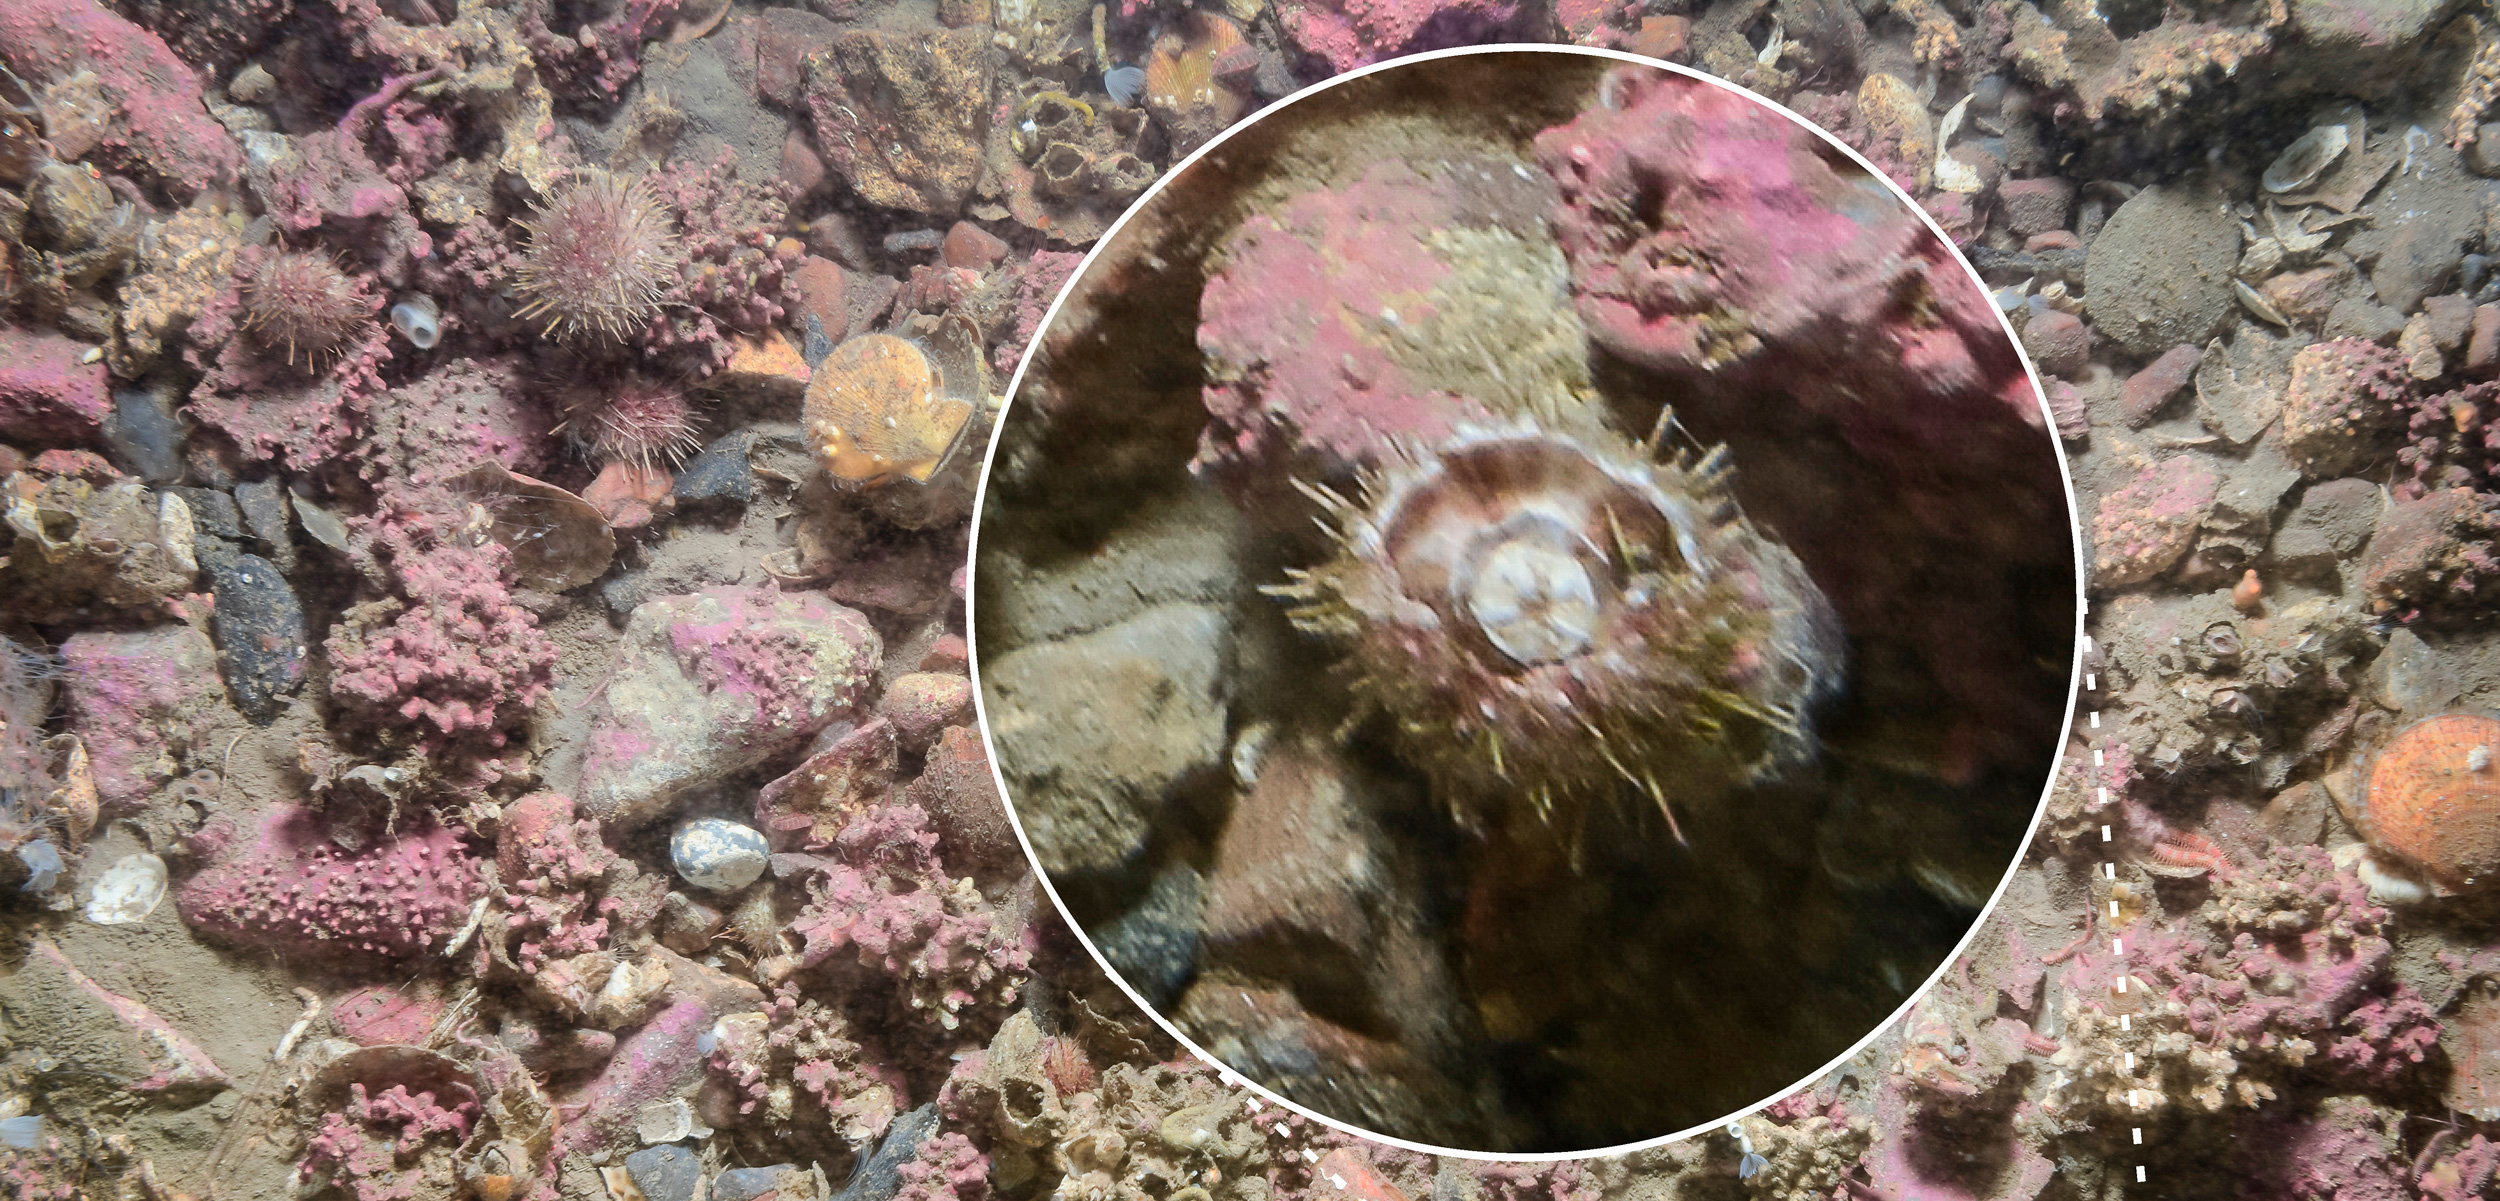 badly injured sea urchin